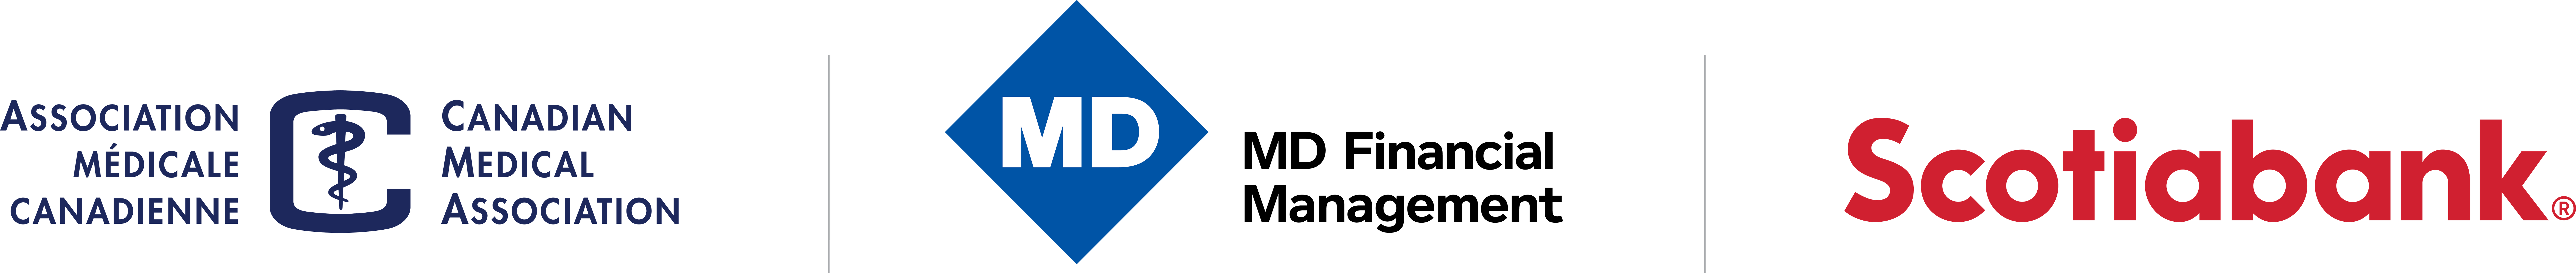 CMA MD Managment Scotiabank Logo